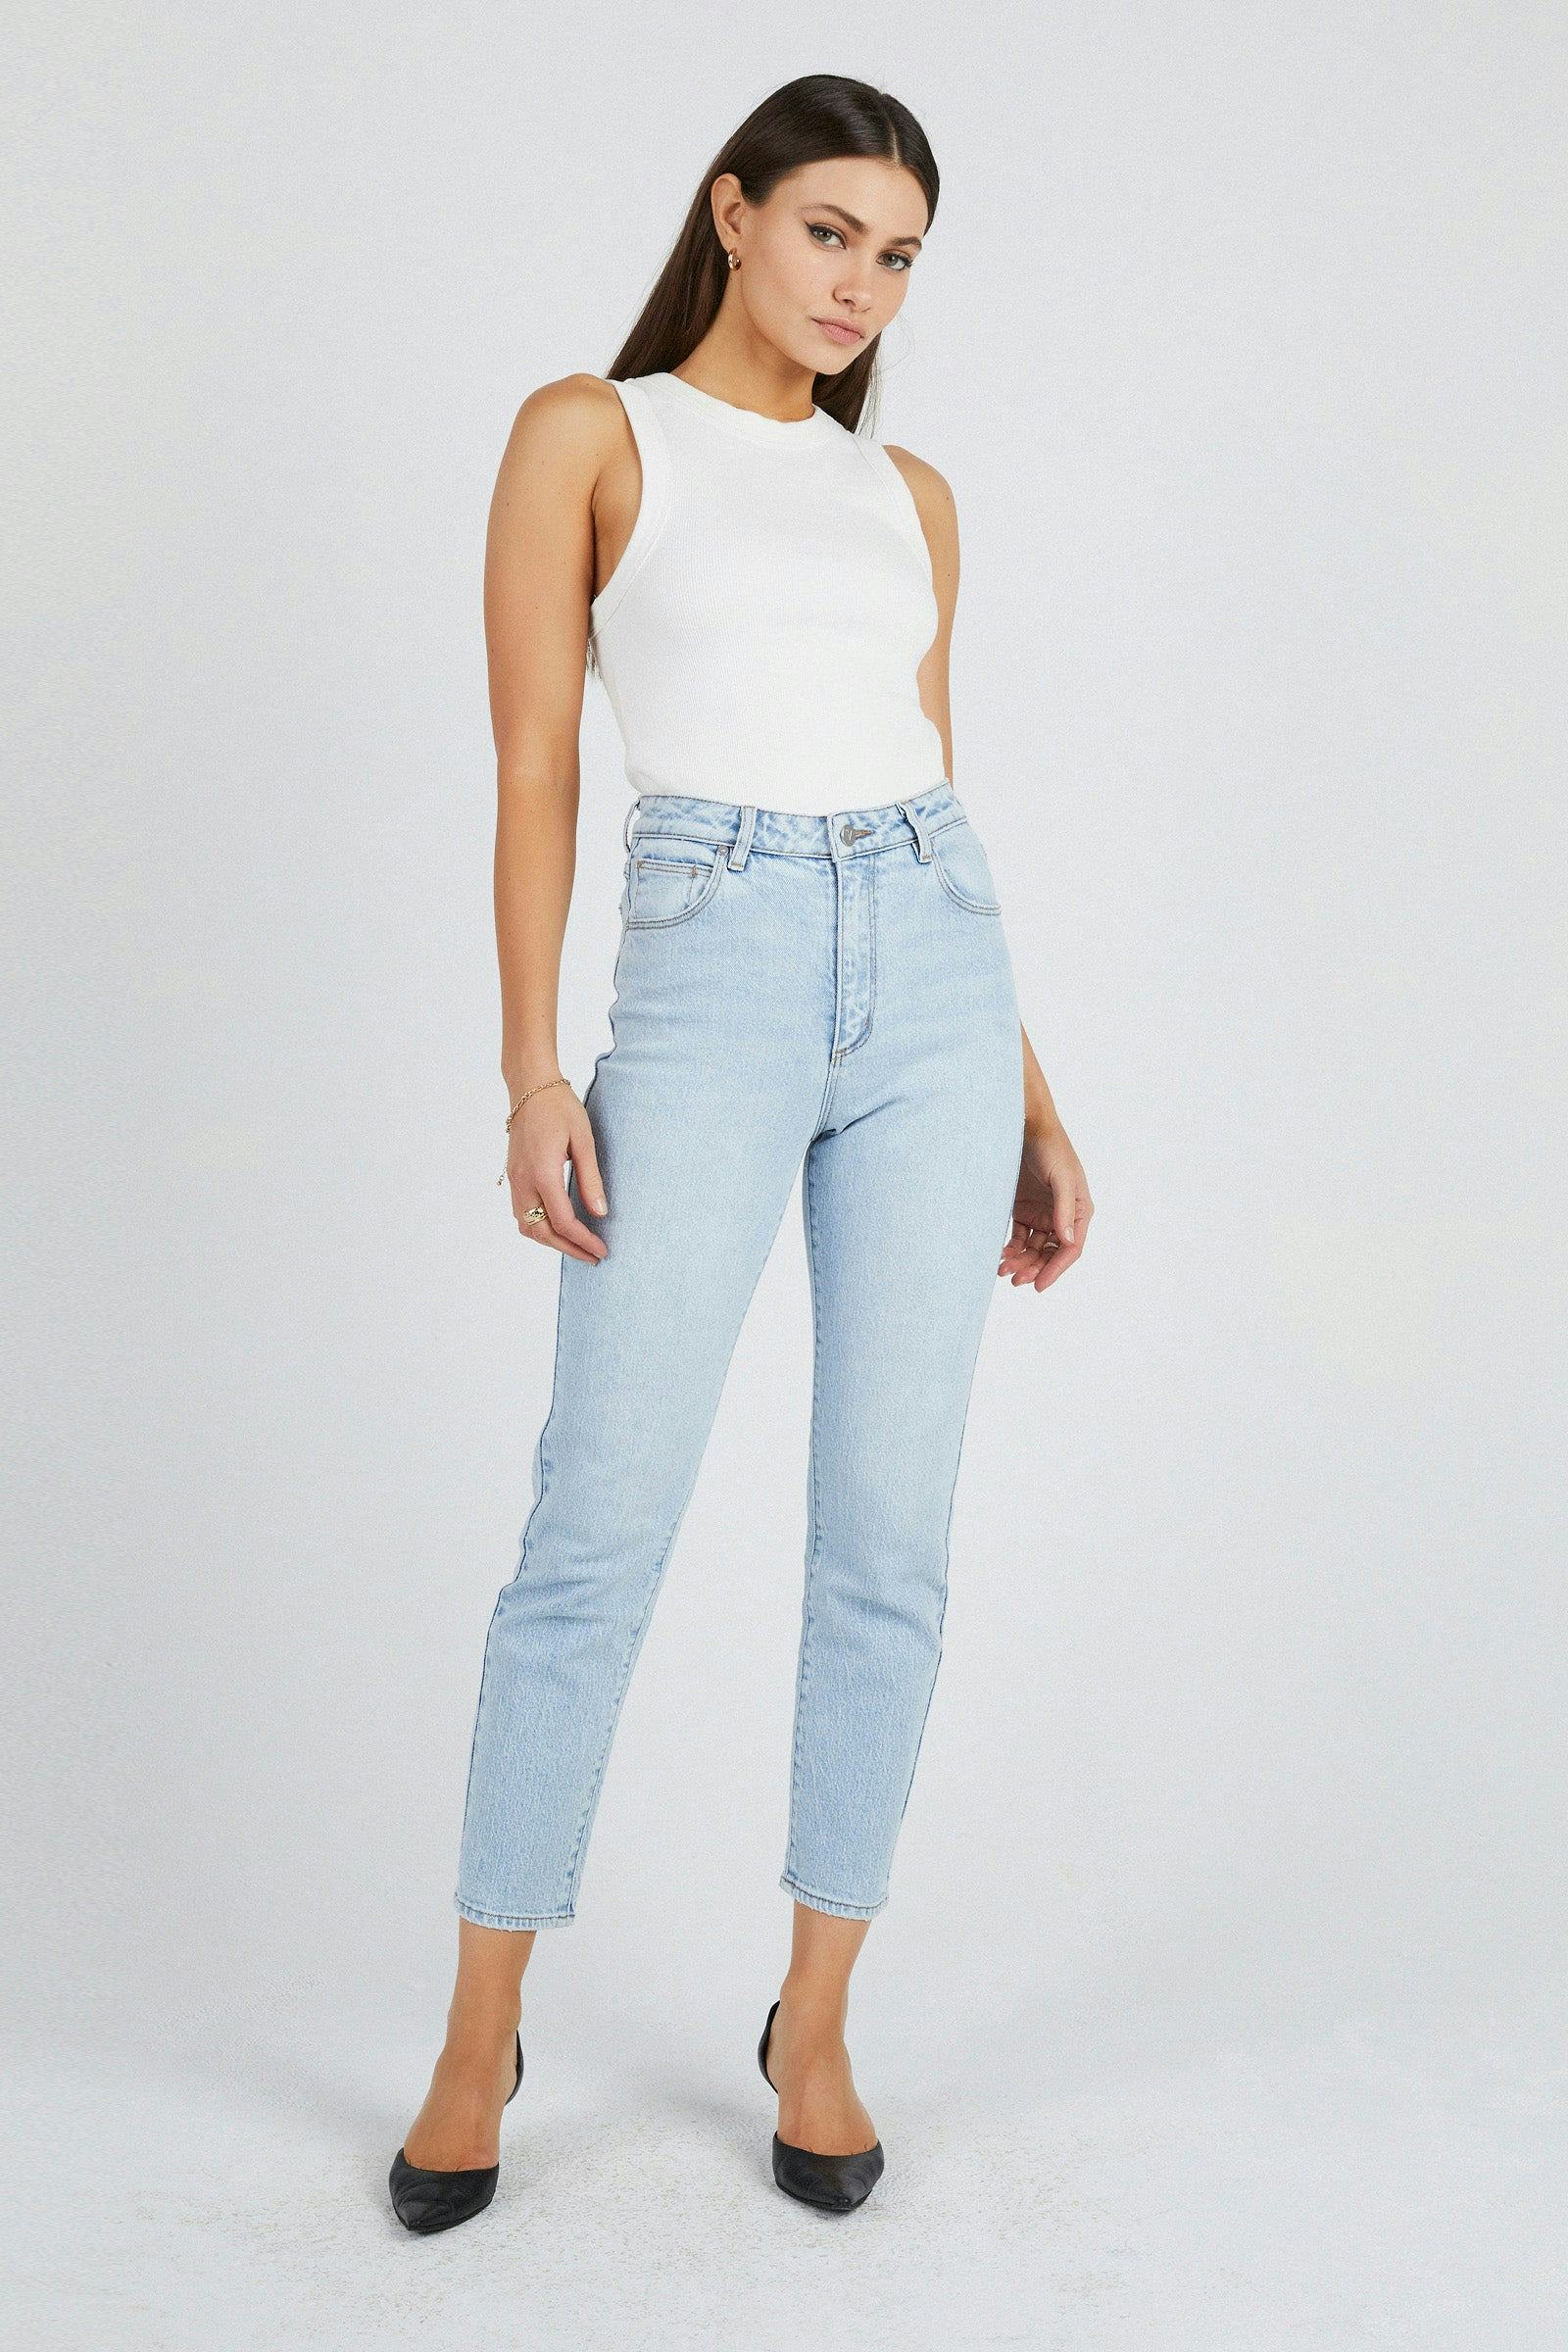 Buy Women's Light Wash Blue Denim Jeans Online